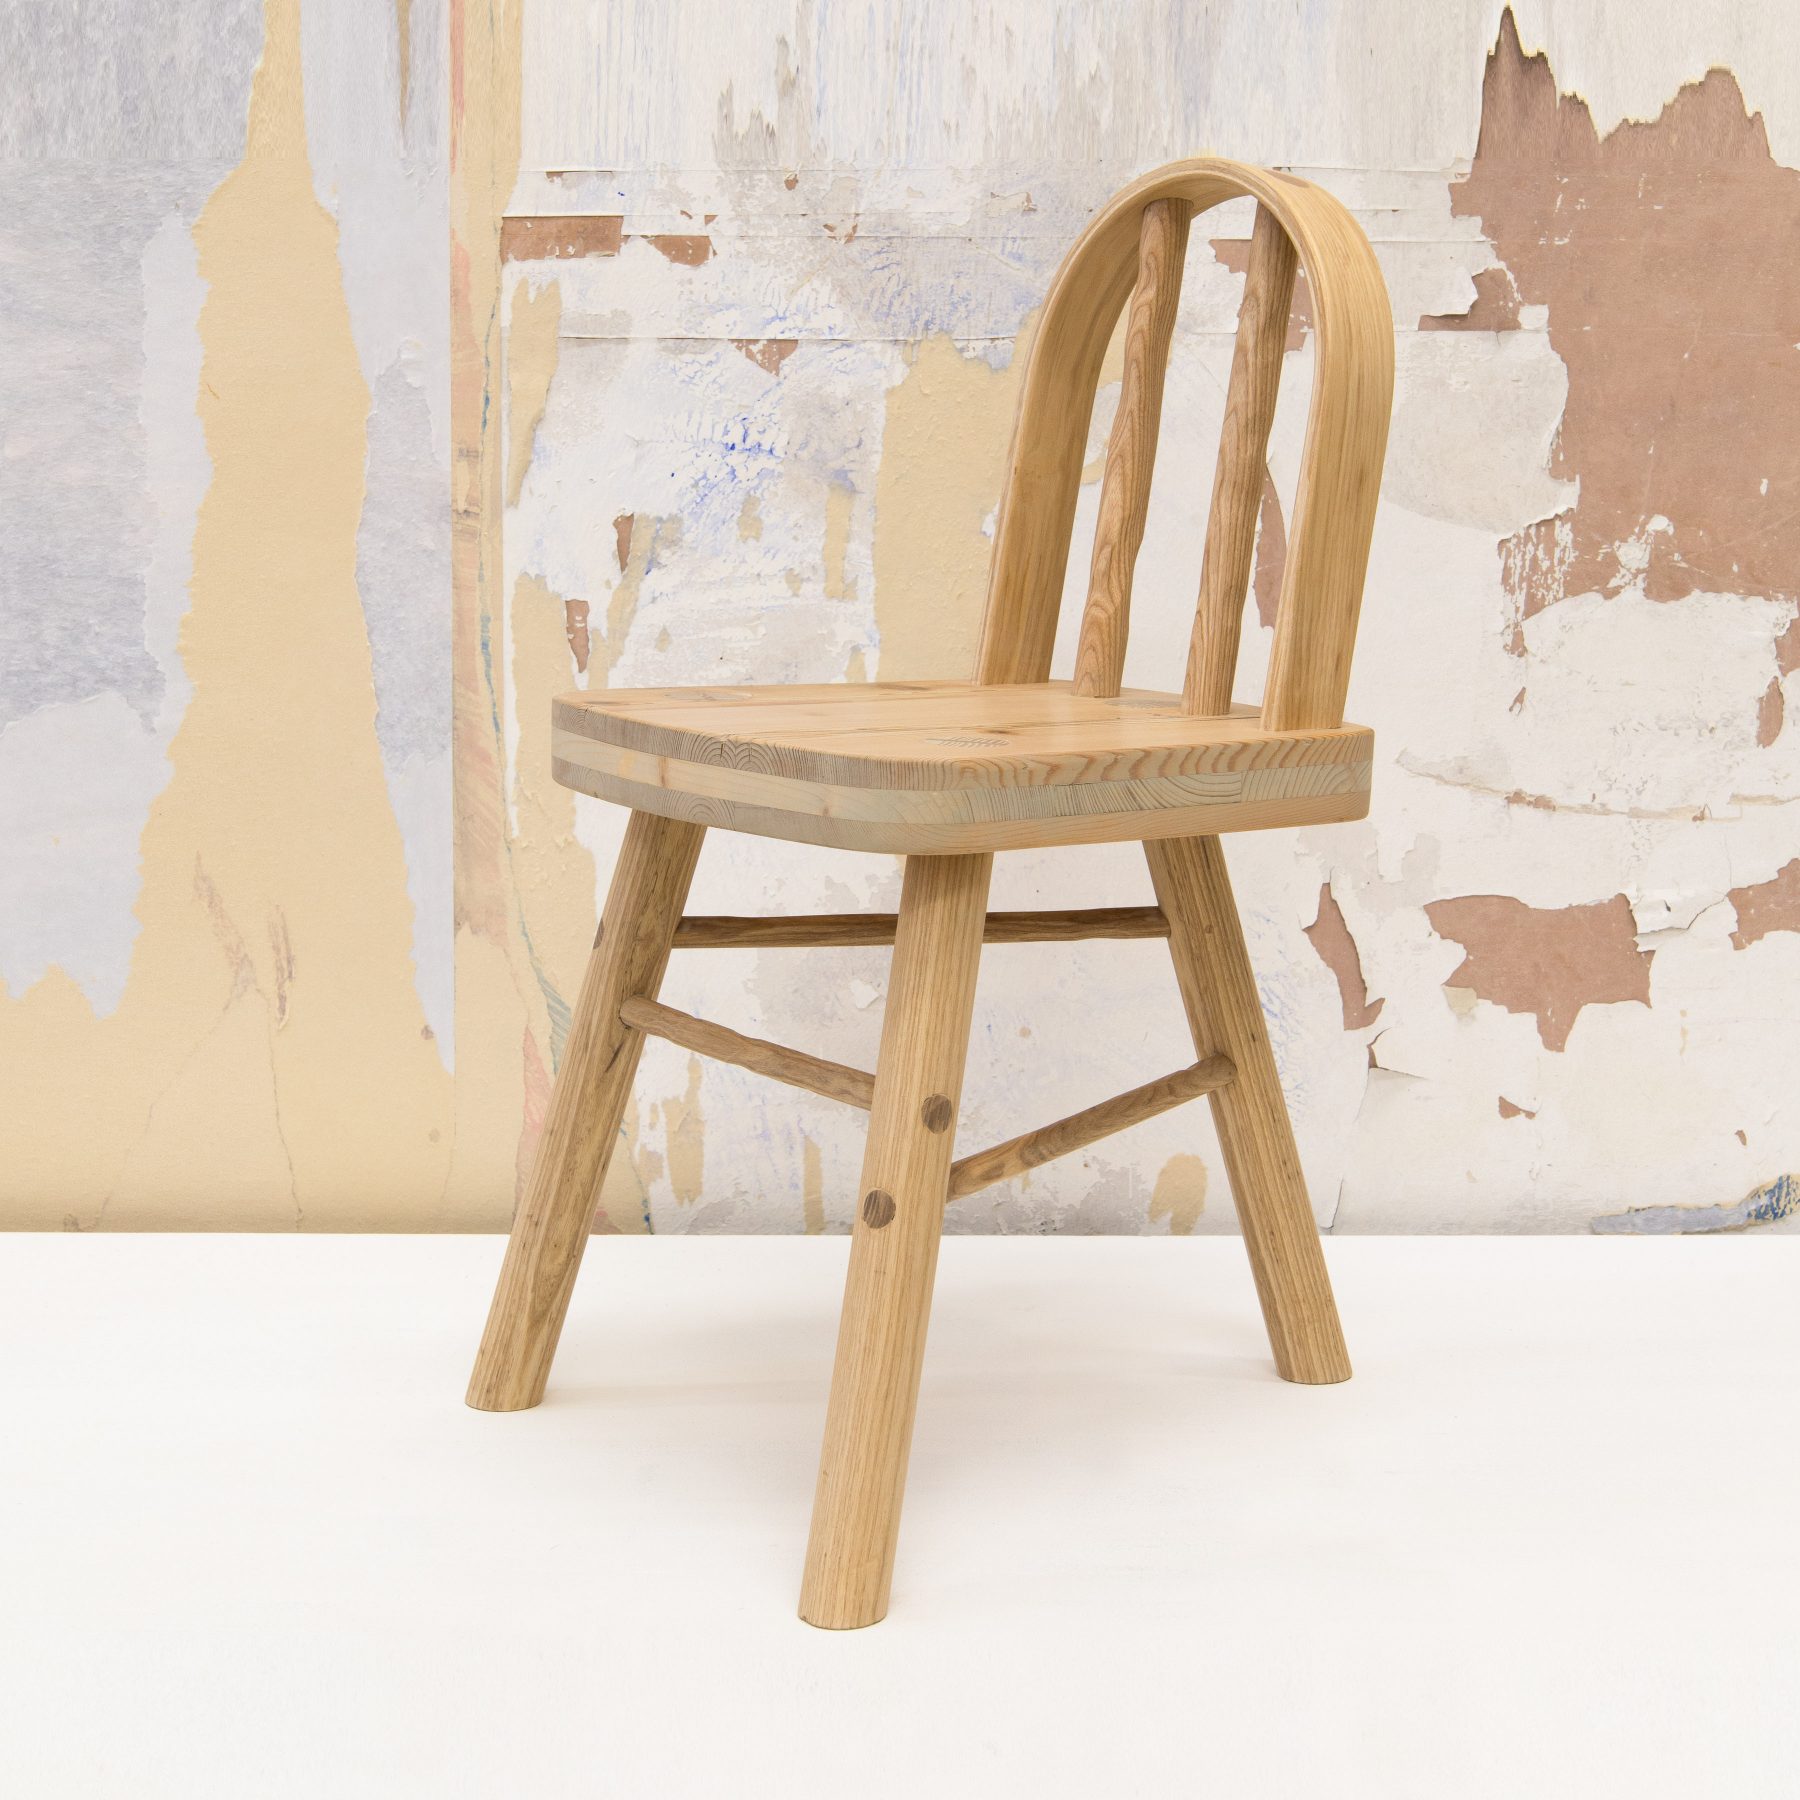 Jan Hendzel Studio lentini chair-1